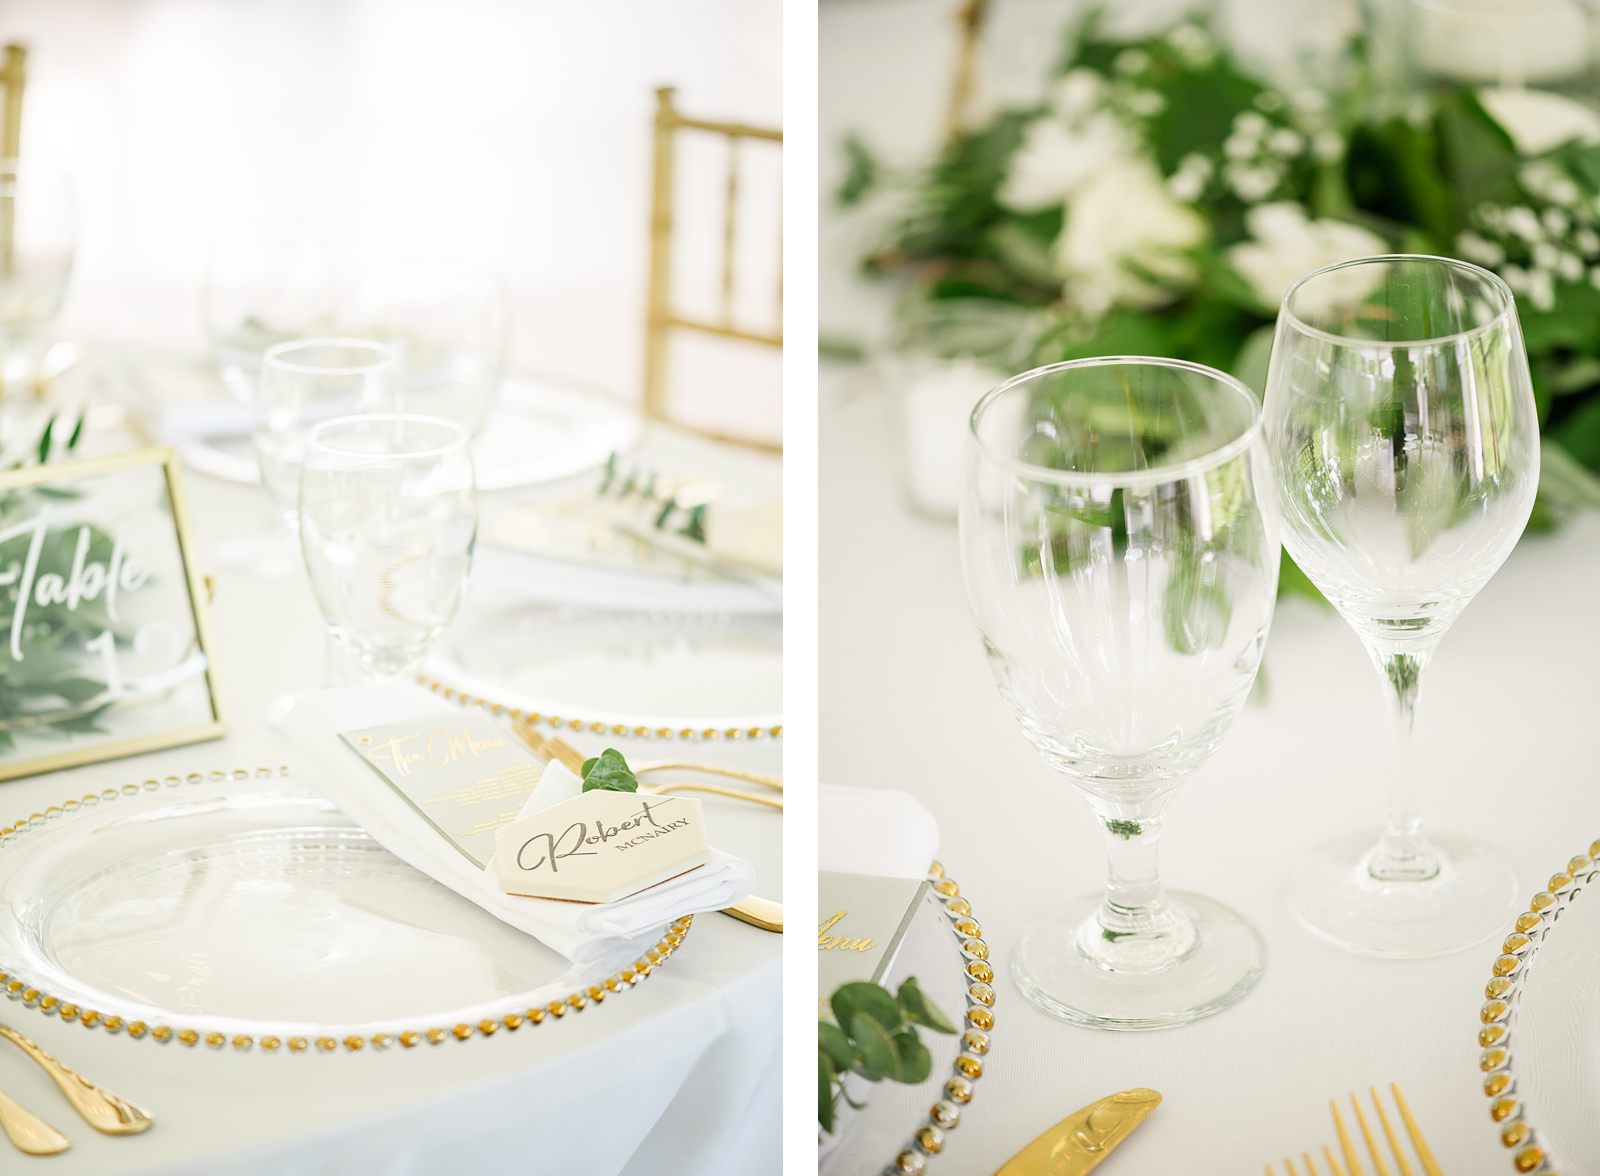 Light and elegant reception decor at spring virginia wedding reception